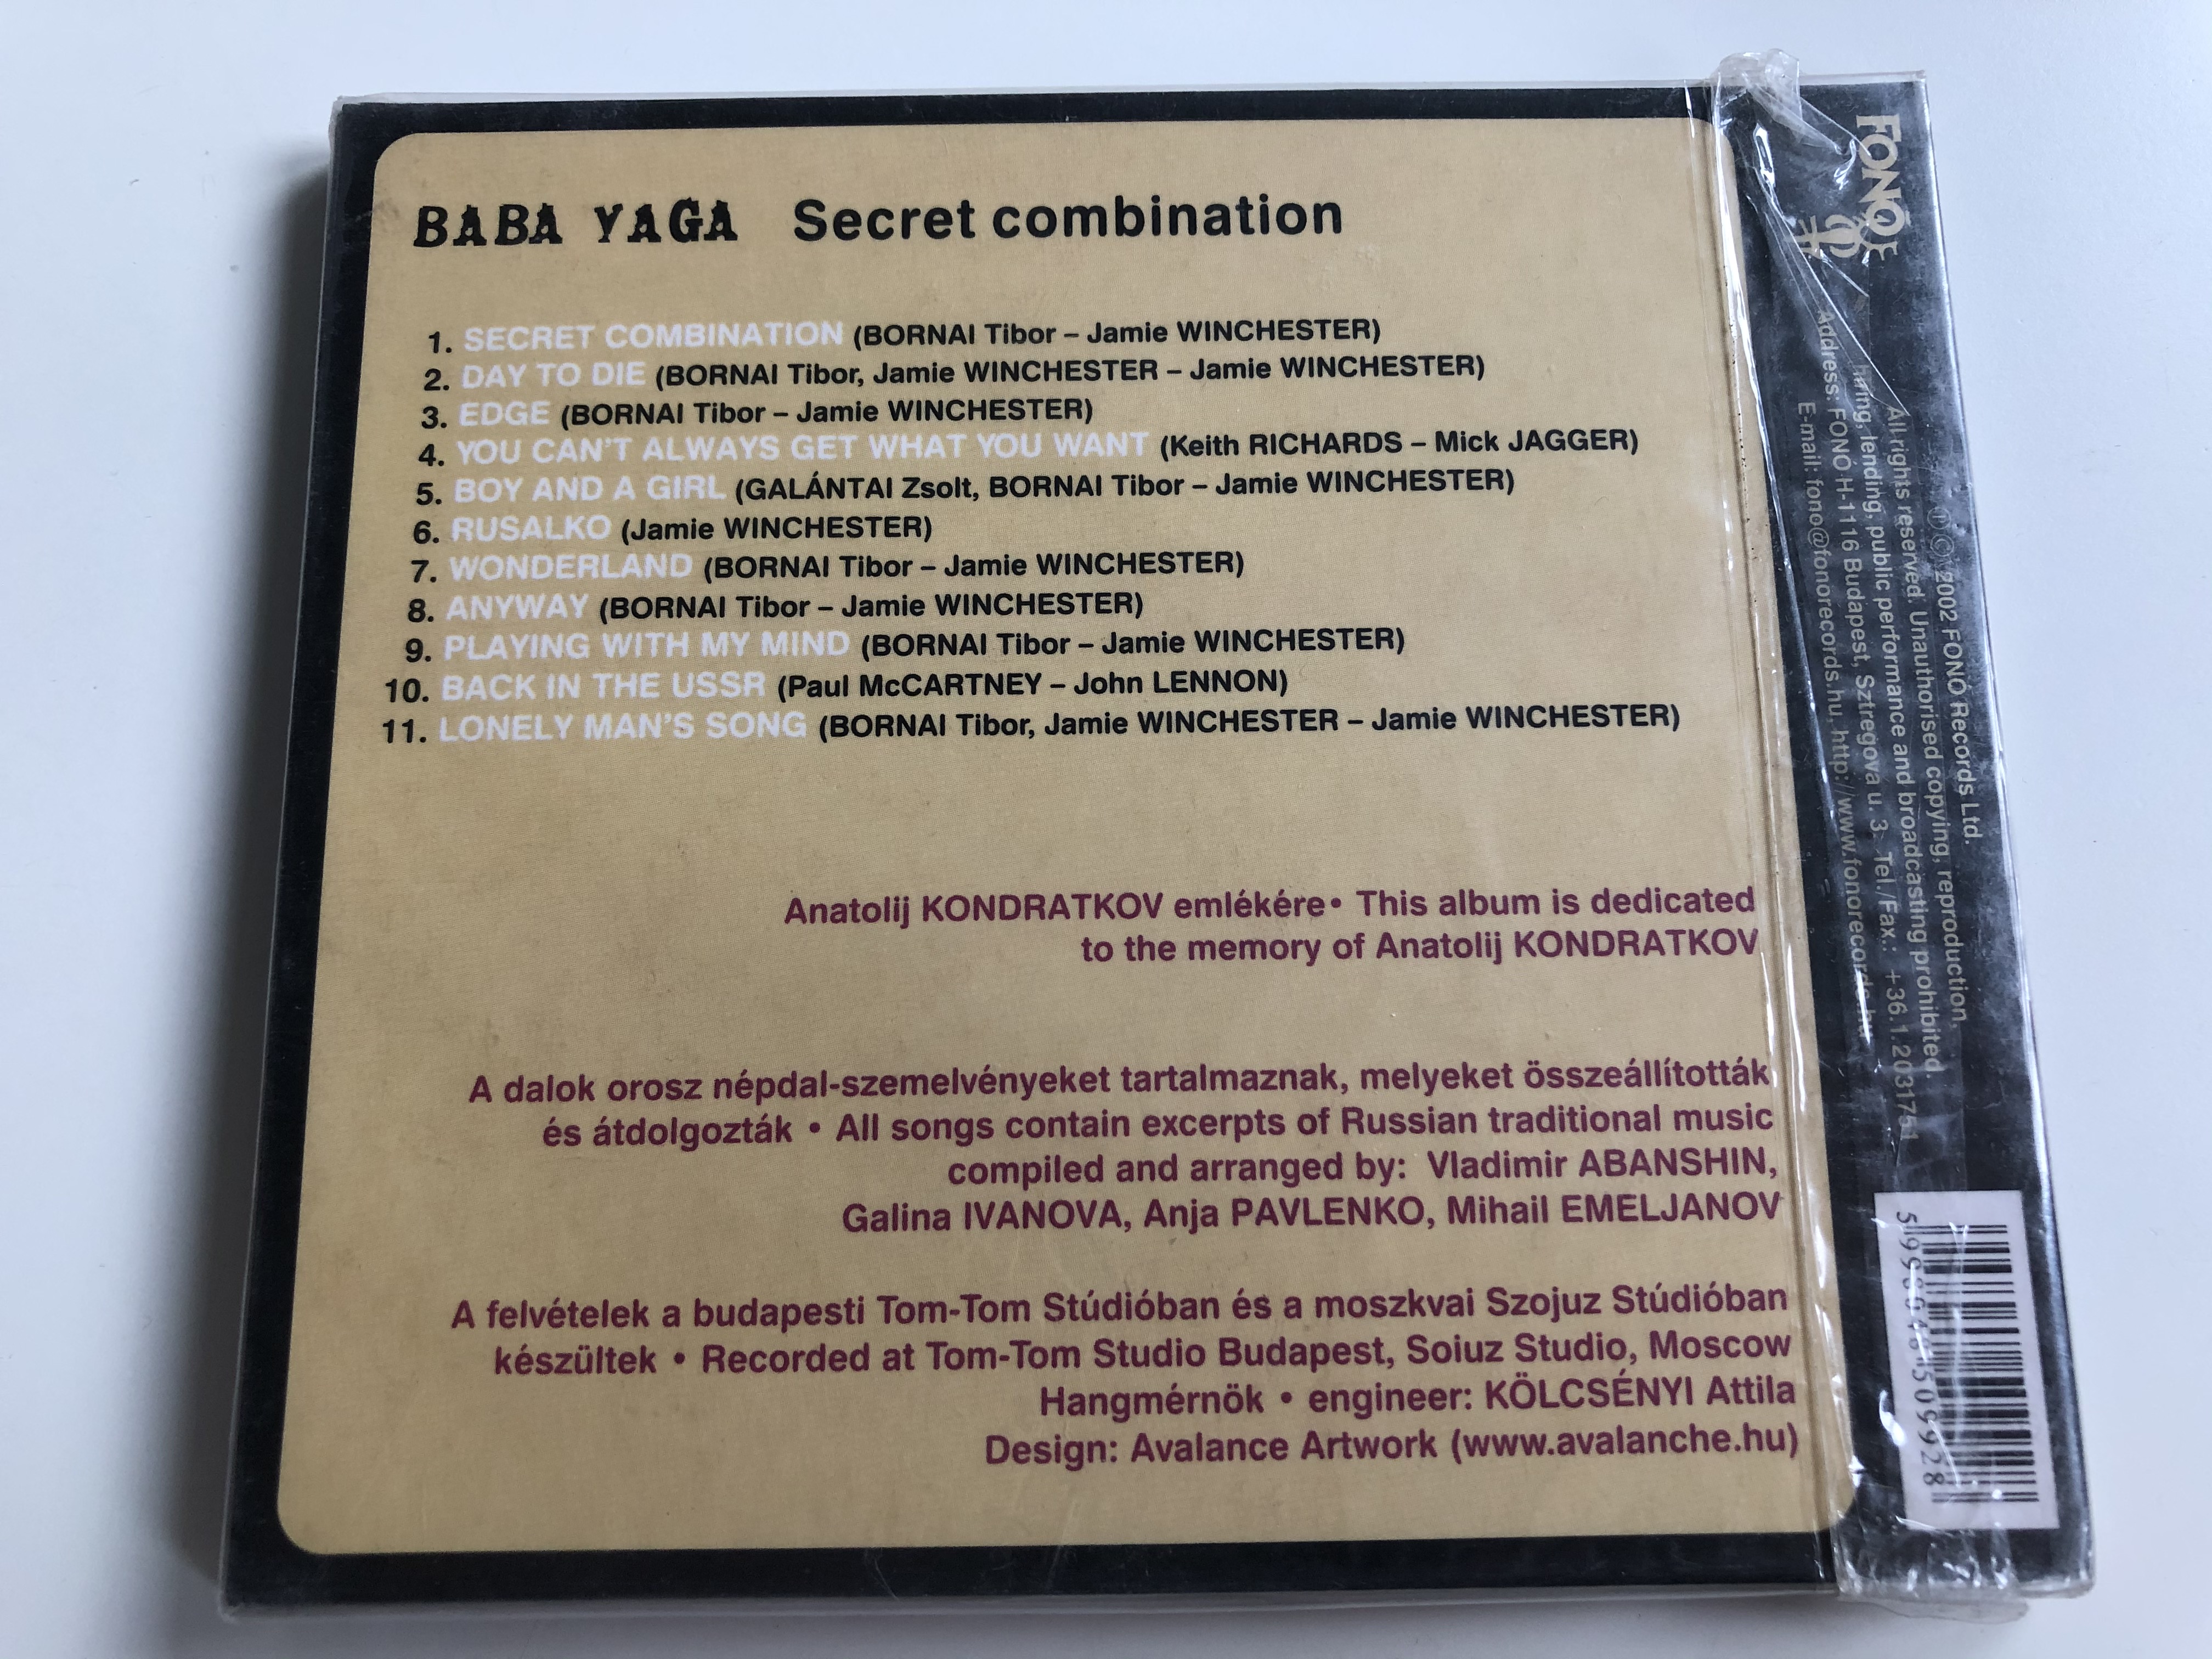 baba-yaga-secret-combination-fon-records-audio-cd-2002-fa-099-2-2-.jpg